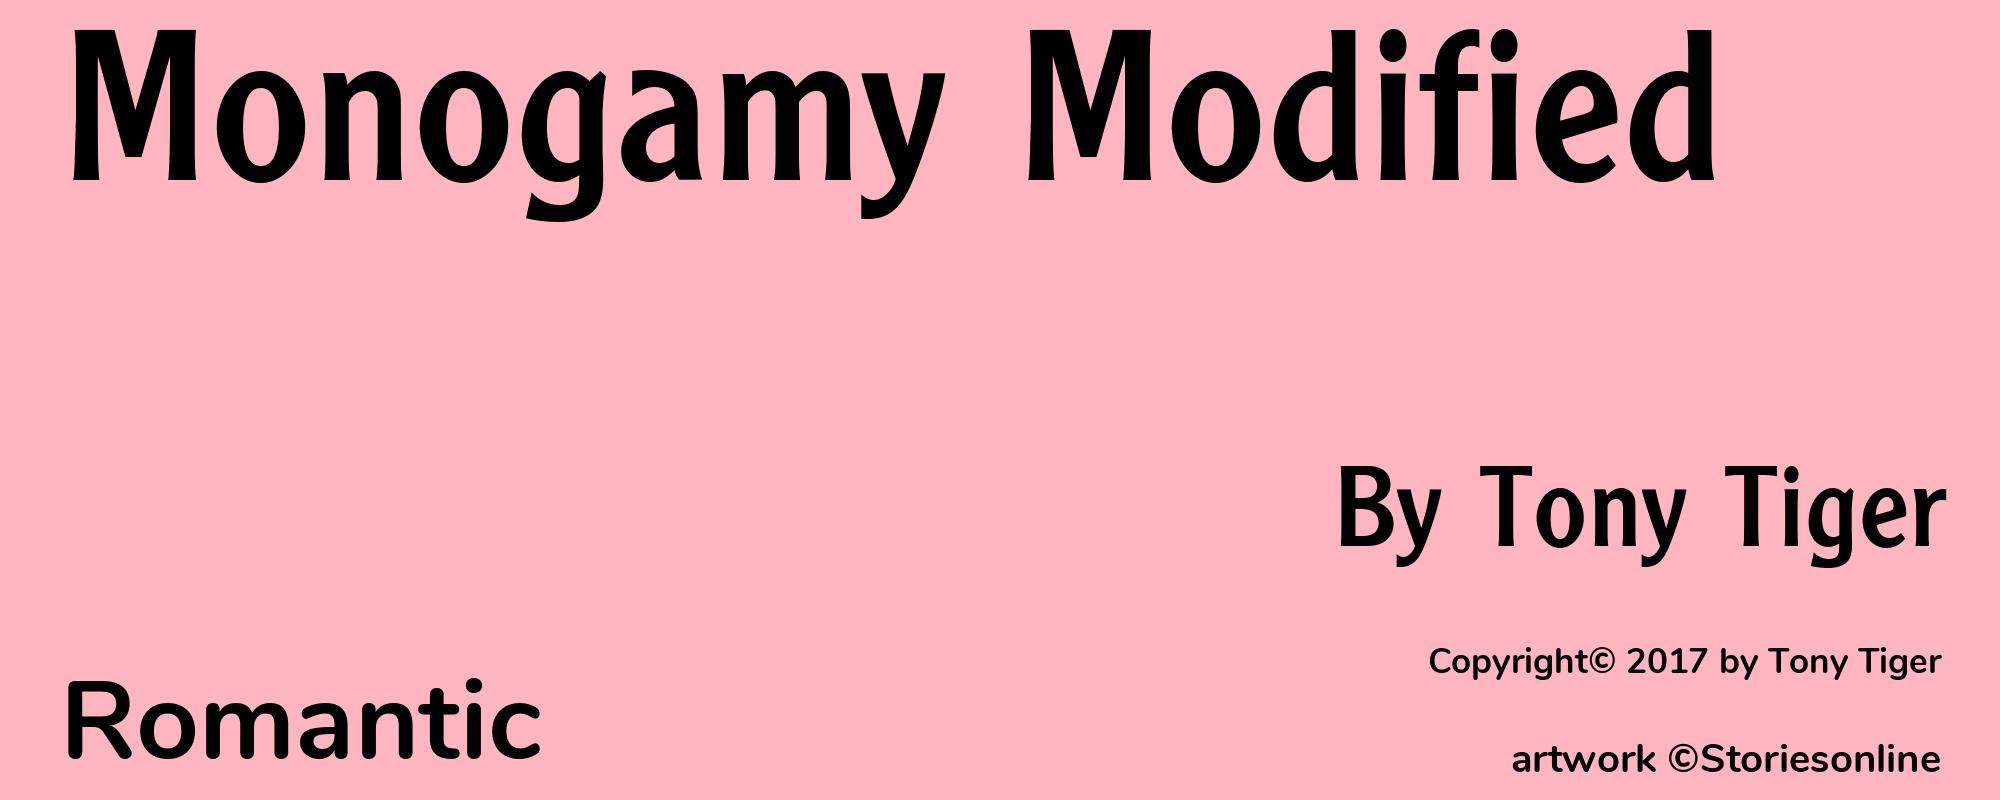 Monogamy Modified - Cover